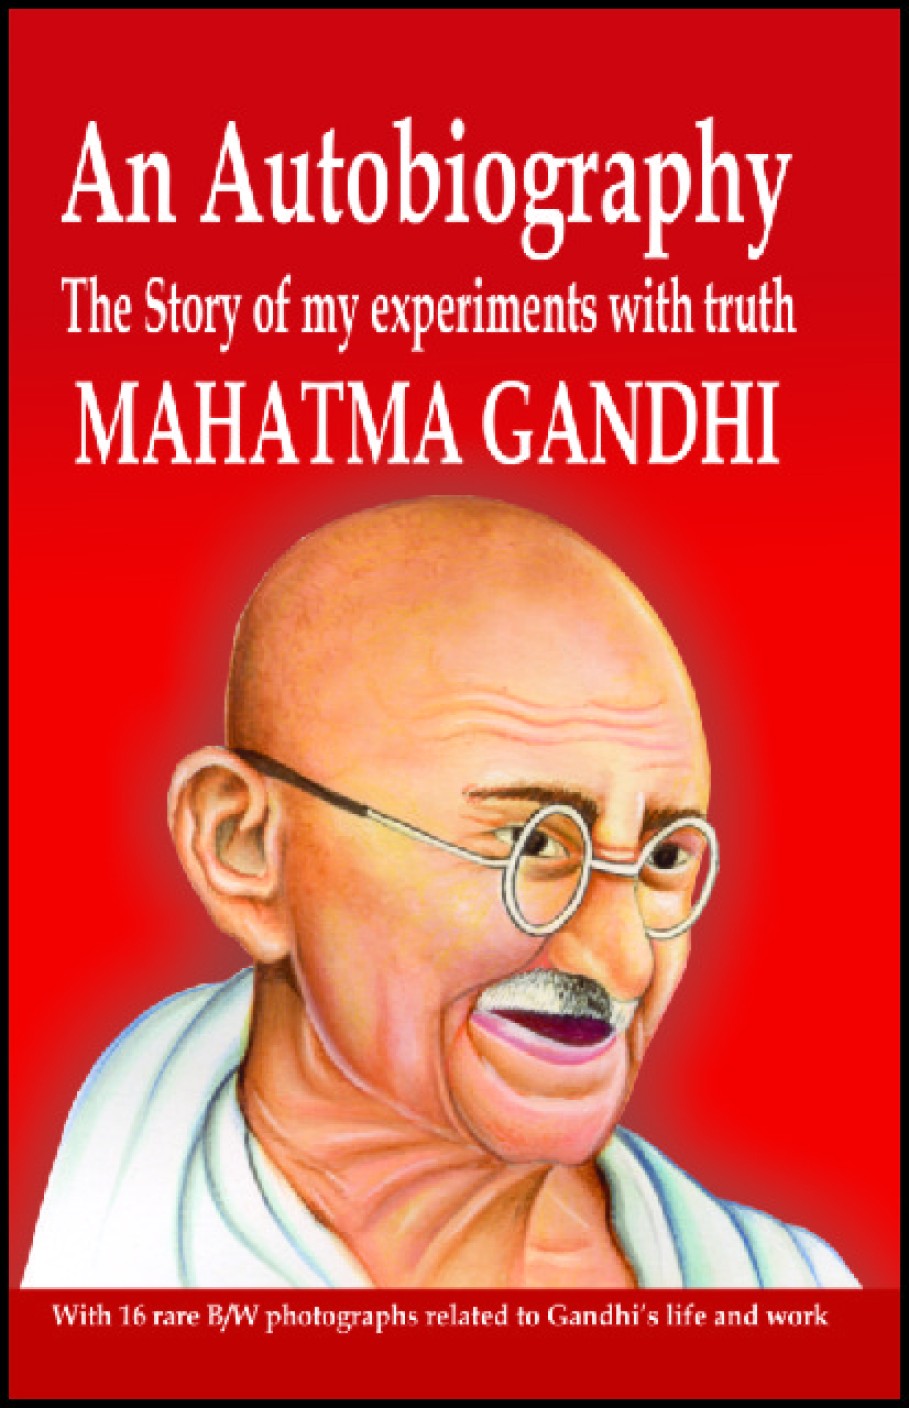 autobiography of mahatma gandhi in hindi